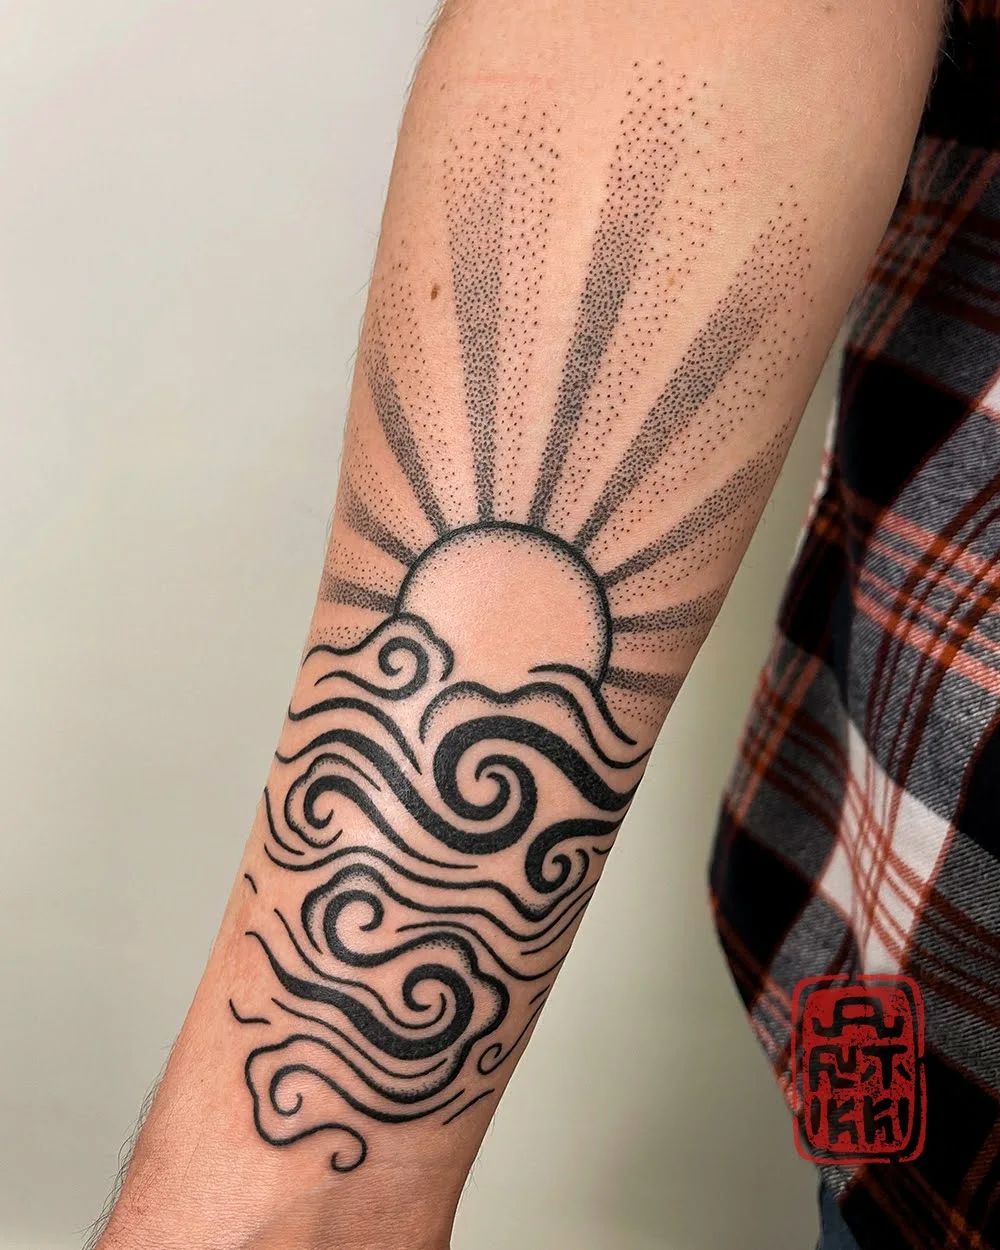 Amazing Sun Tattoo Ideas To Express Your Inner Light